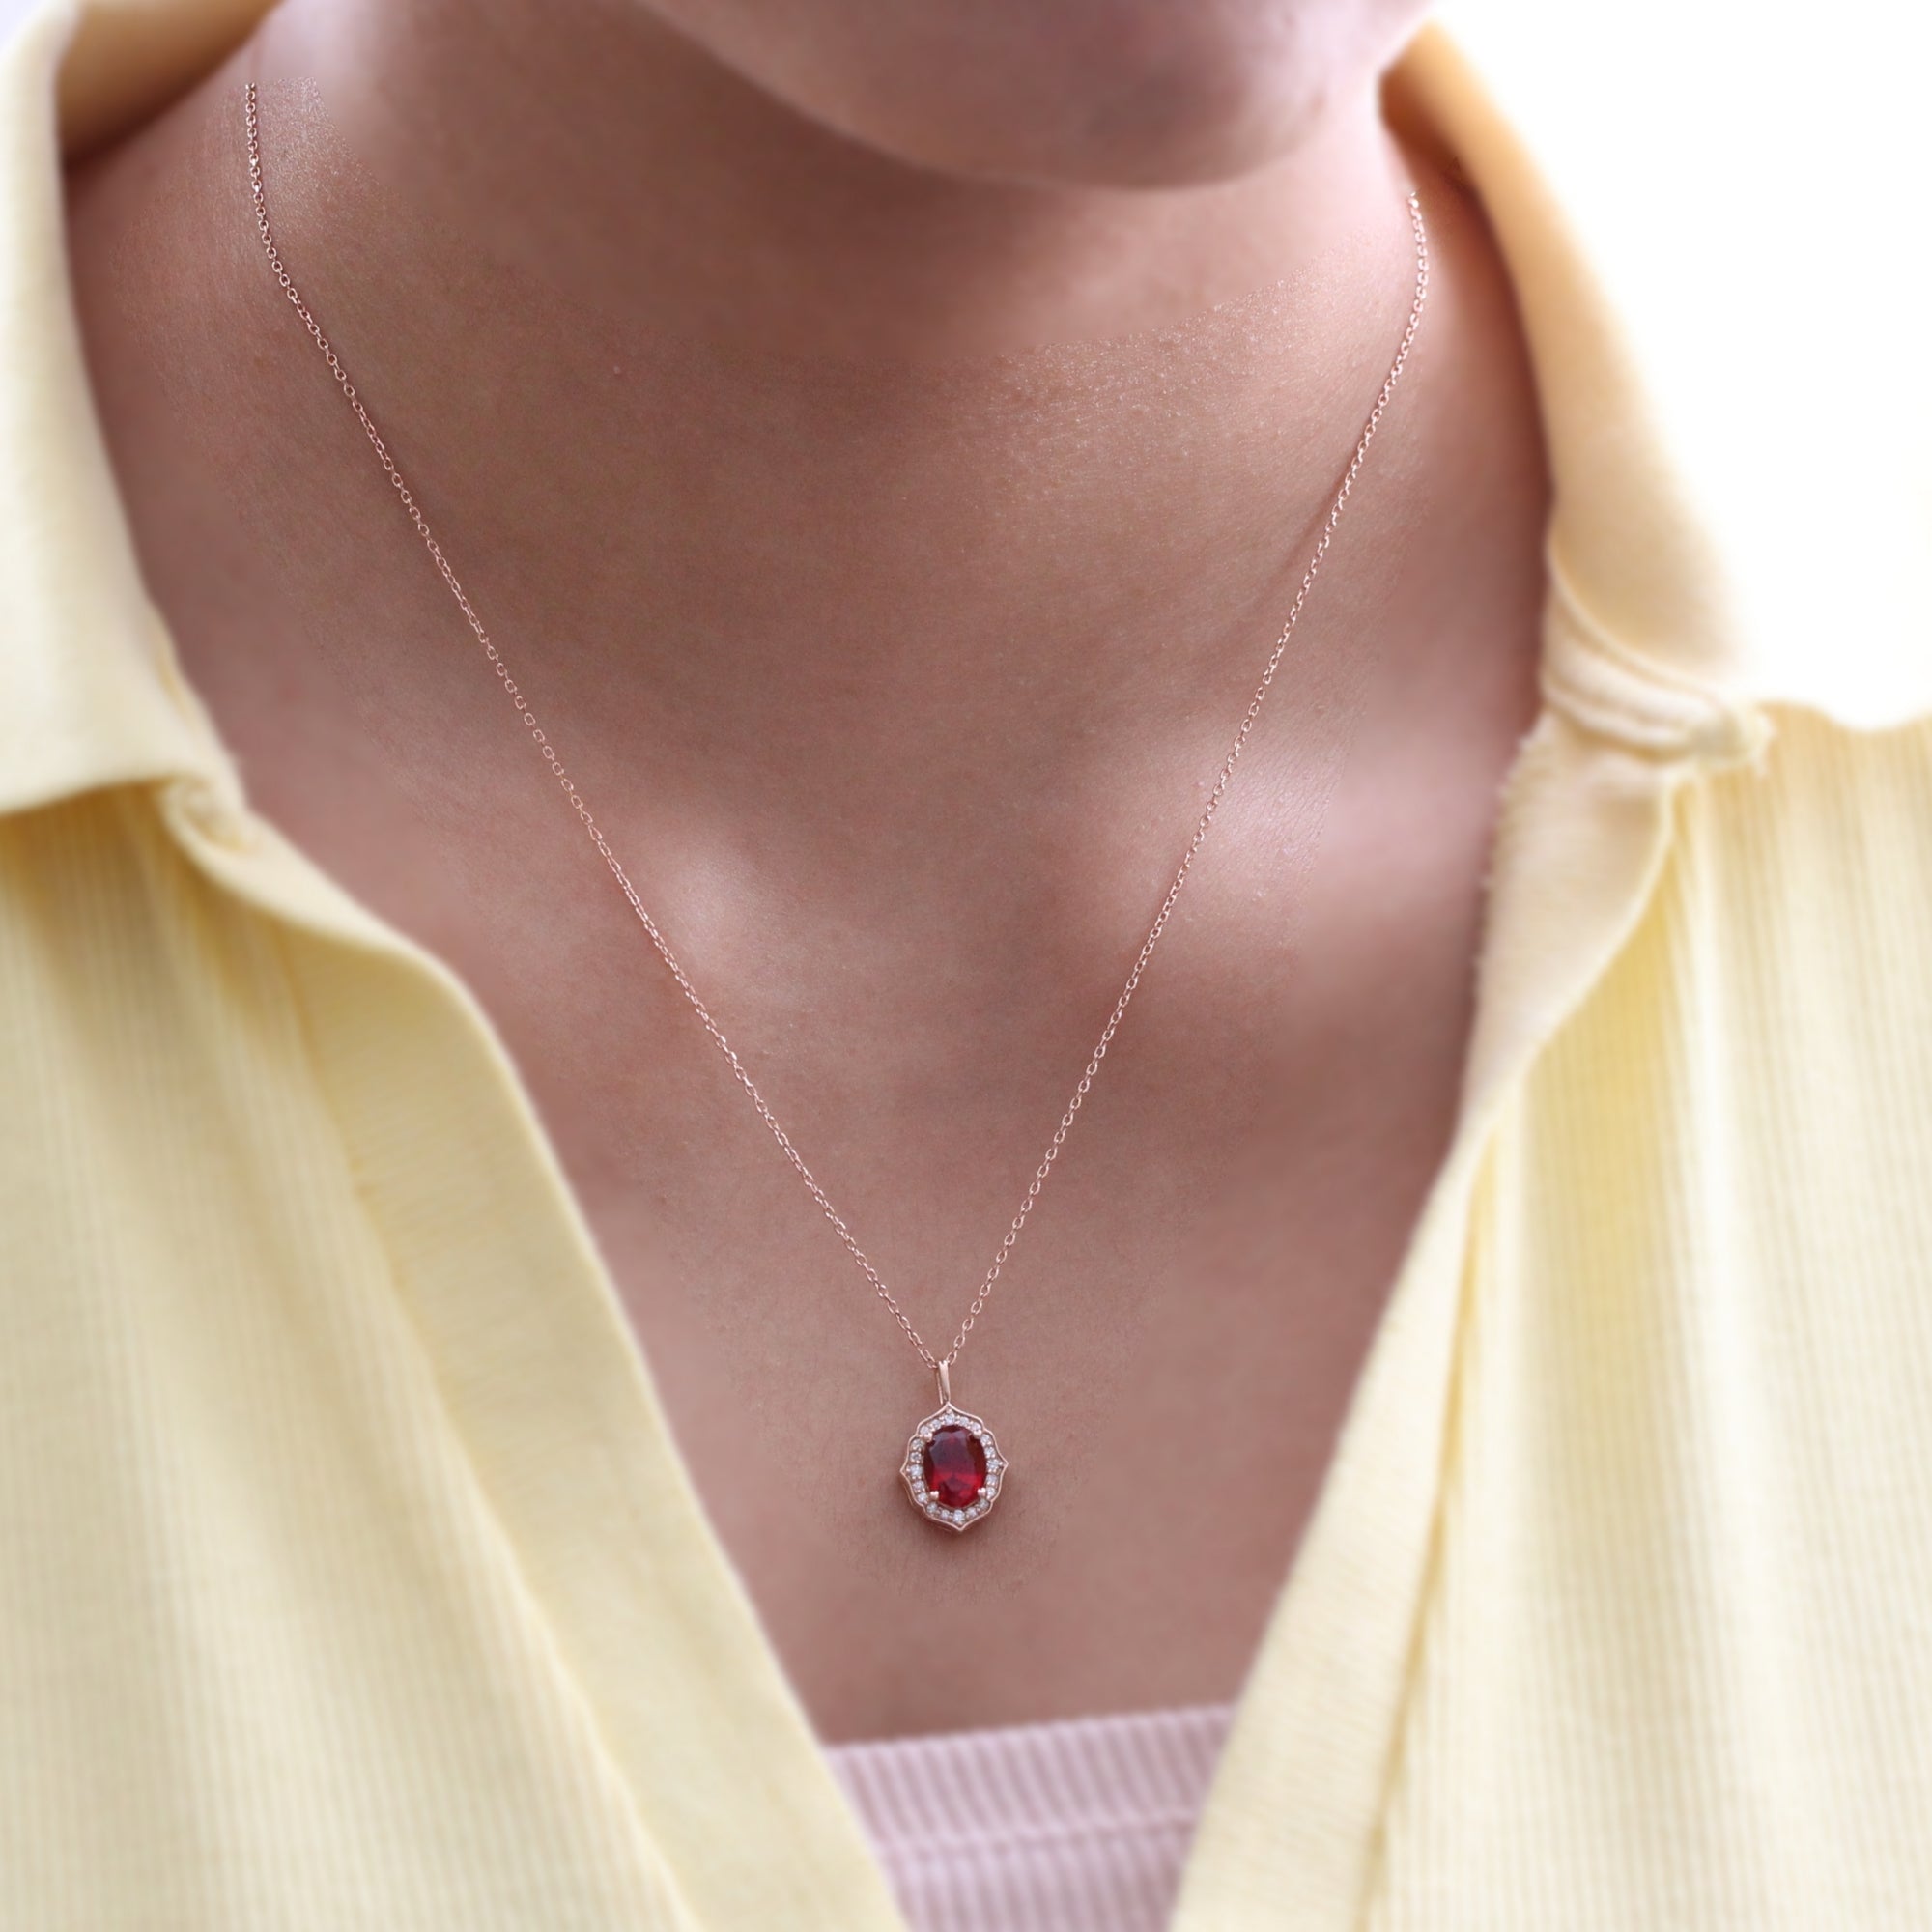 oval ruby necklace rose gold vintage style ruby diamond drop pendant necklace la more design jewelry